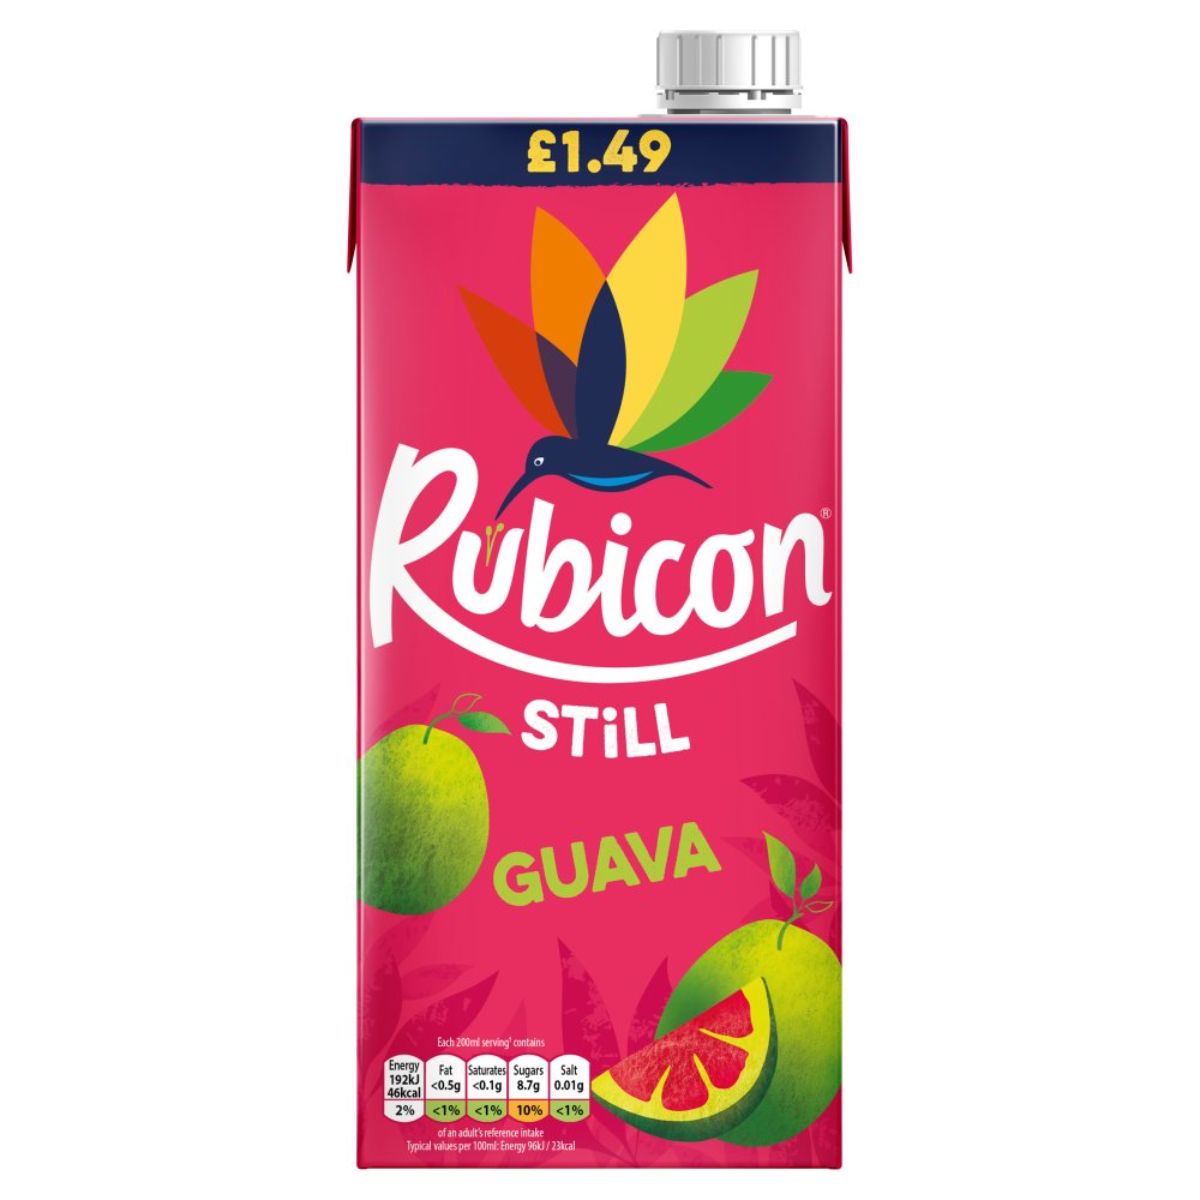 Rubicon - Still Guava Juice Drink - 1 Litre still guava juice.